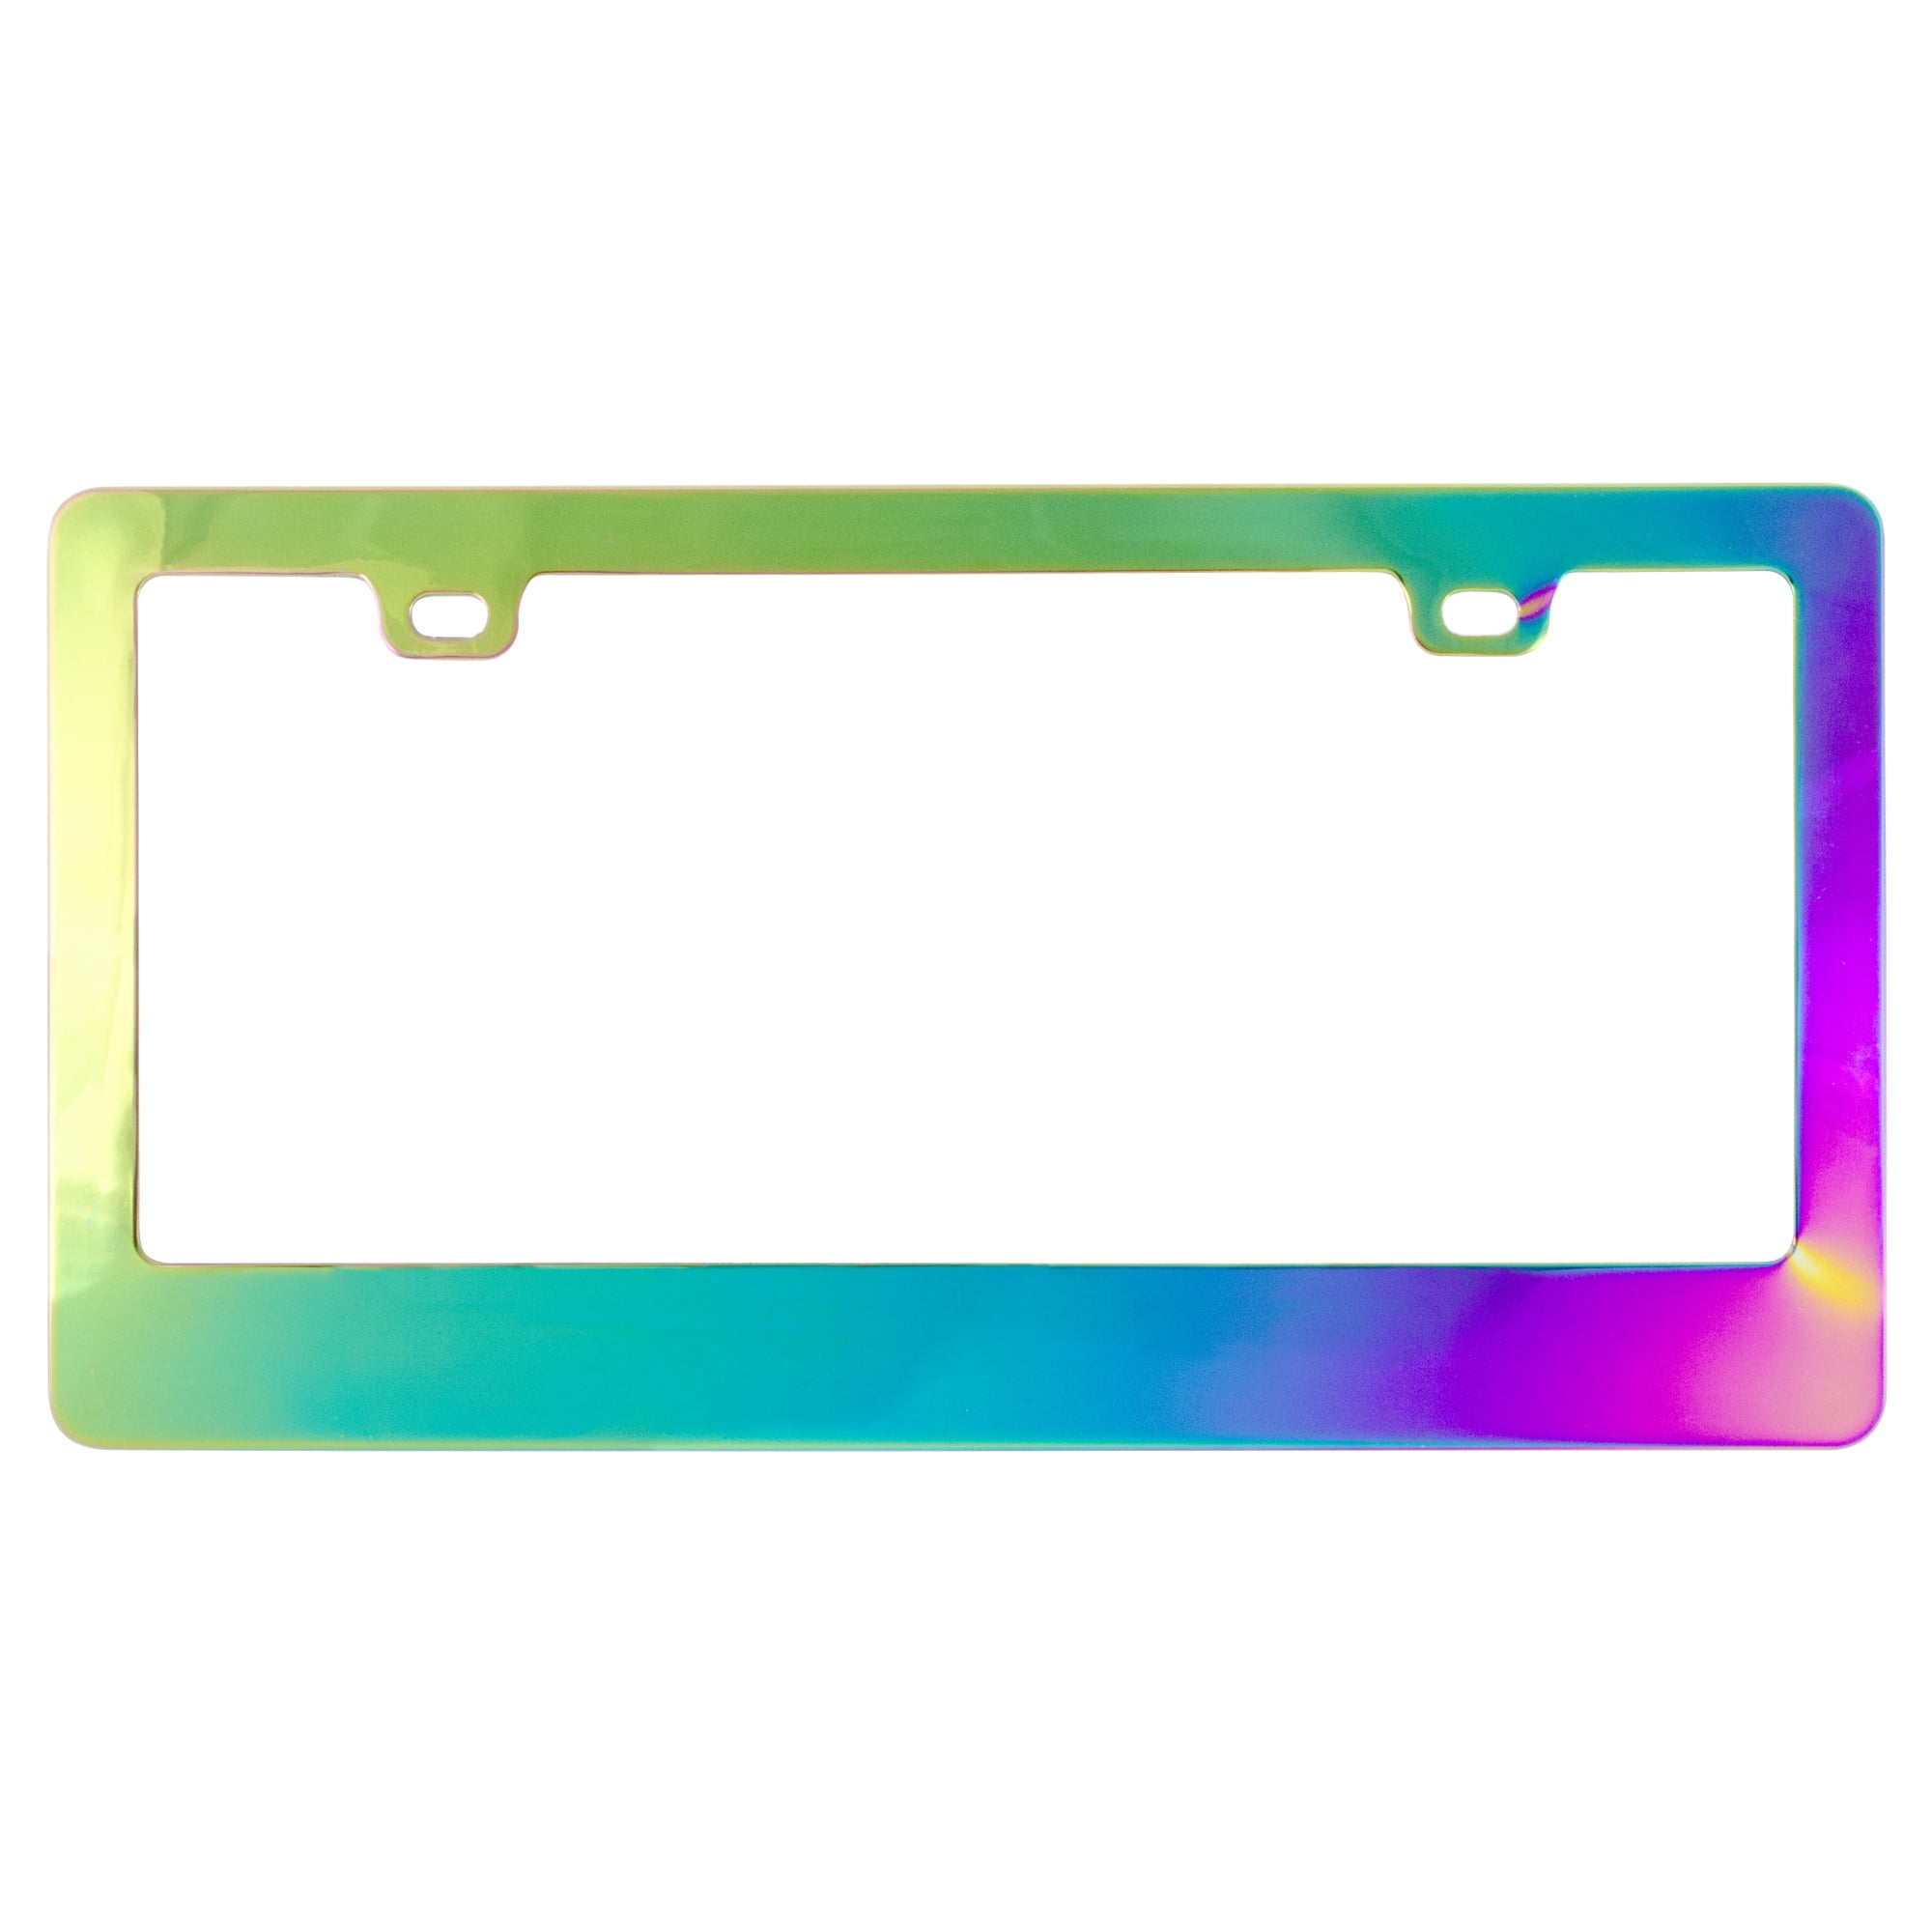 2 Estodian Blue Burnt Rainbow Chameleon Colorful Nismo Sport Car License Plate Tag Holder Frame for Nissan 304 Stainless Steel 